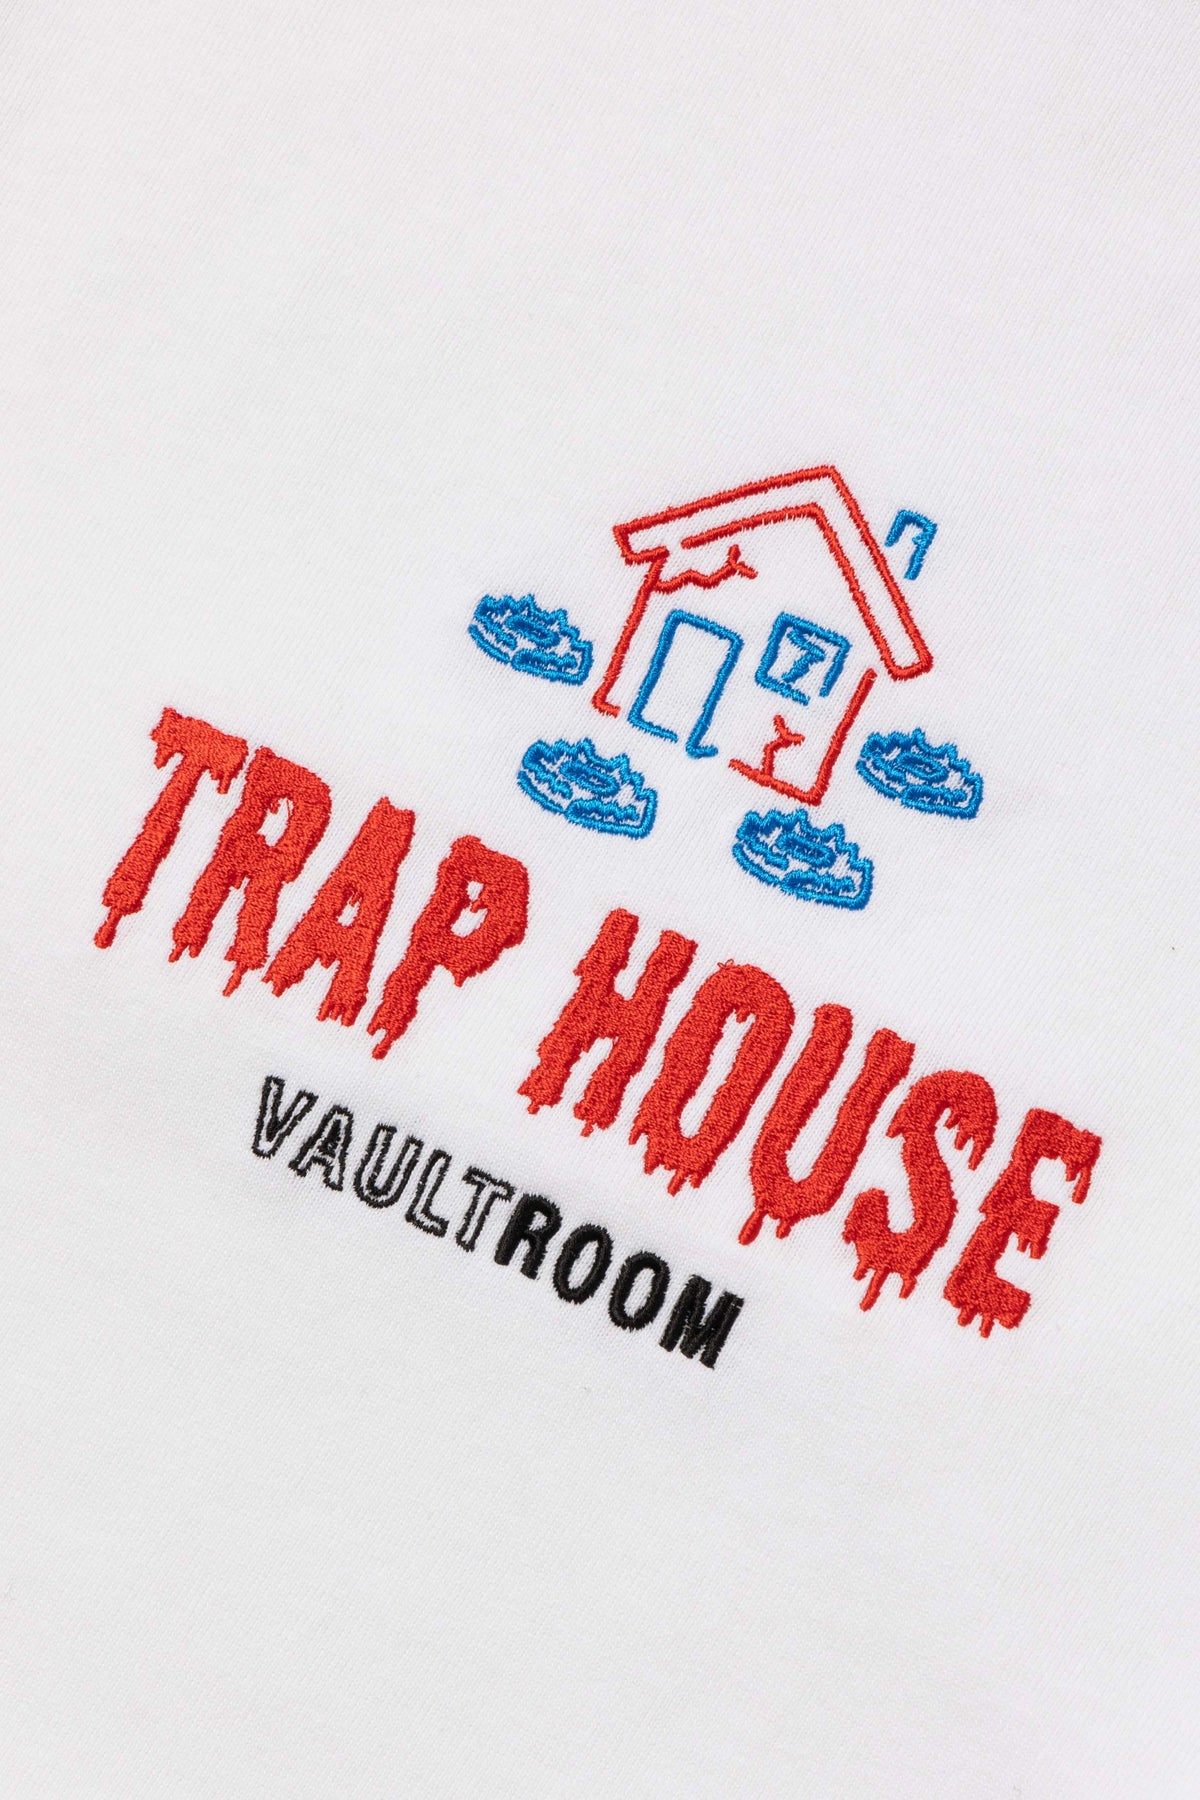 TRAP HOUSE TEE – VAULTROOM